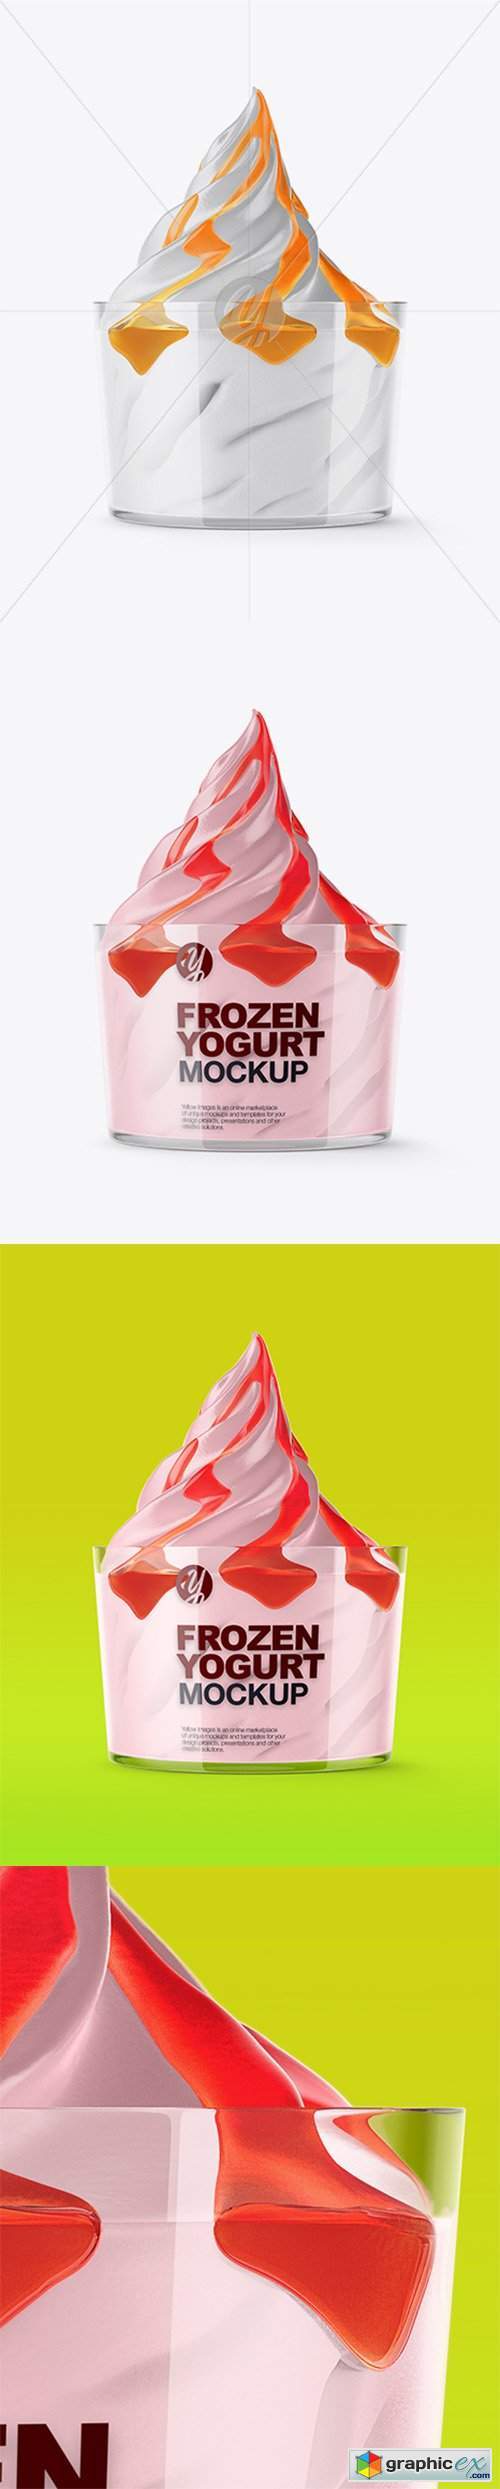 Cup With Frozen Yogurt Mockup